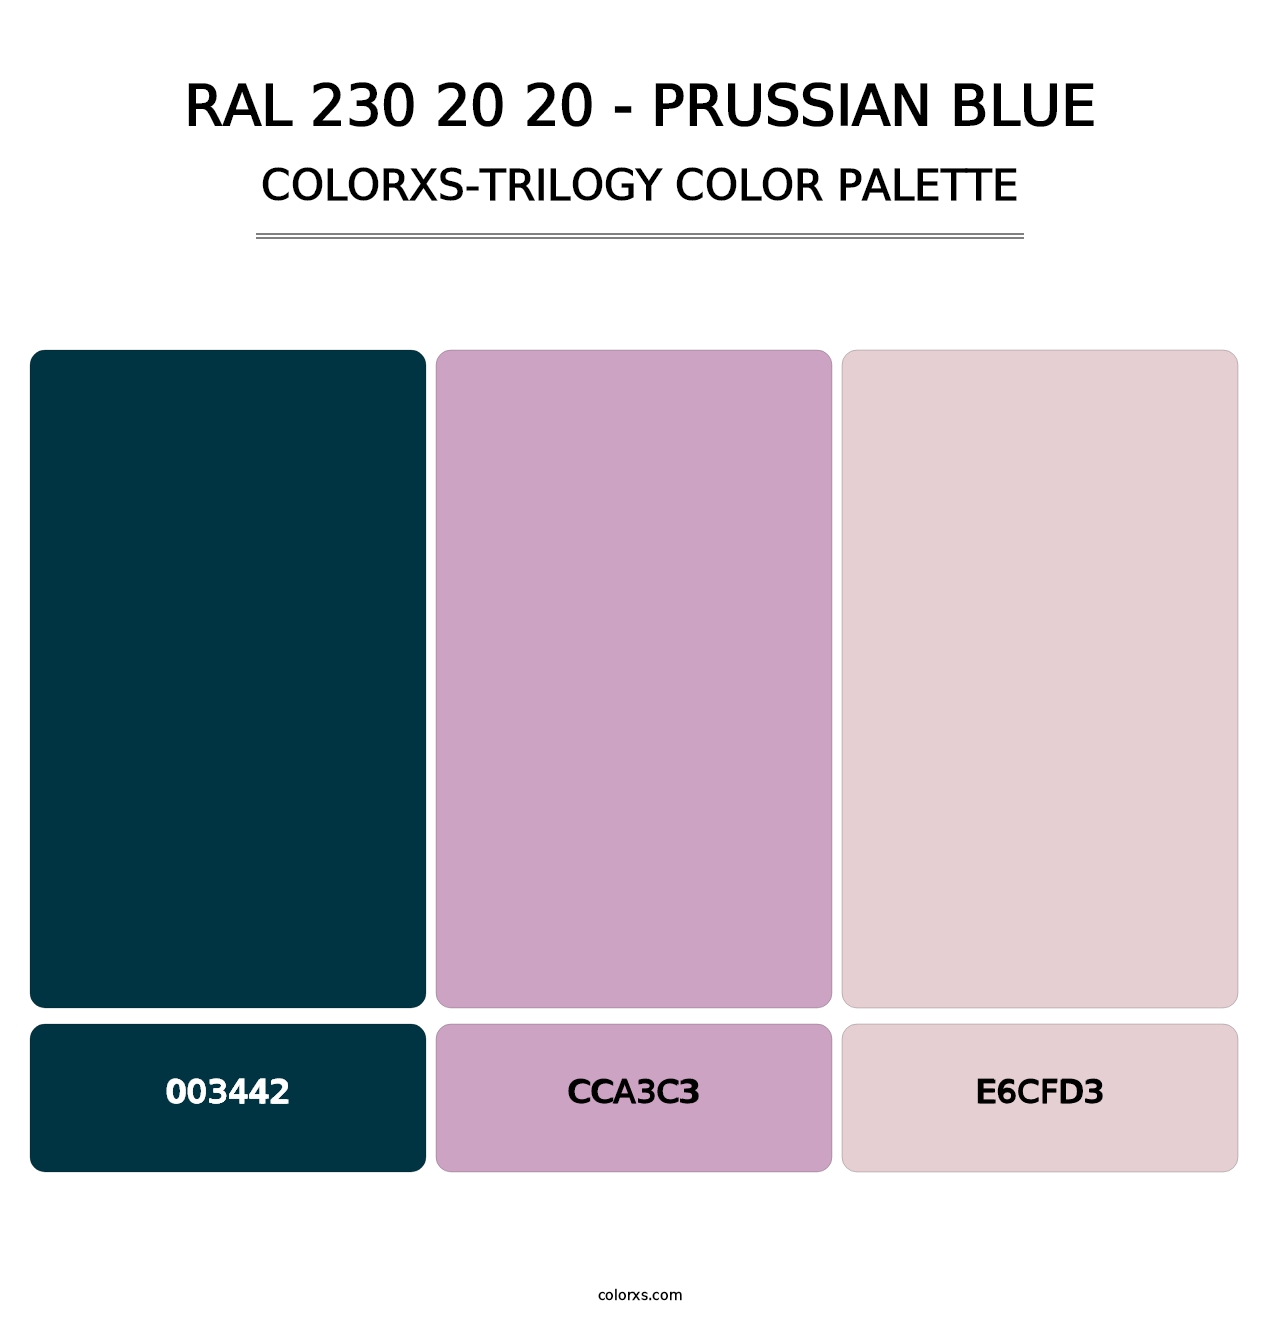 RAL 230 20 20 - Prussian Blue - Colorxs Trilogy Palette